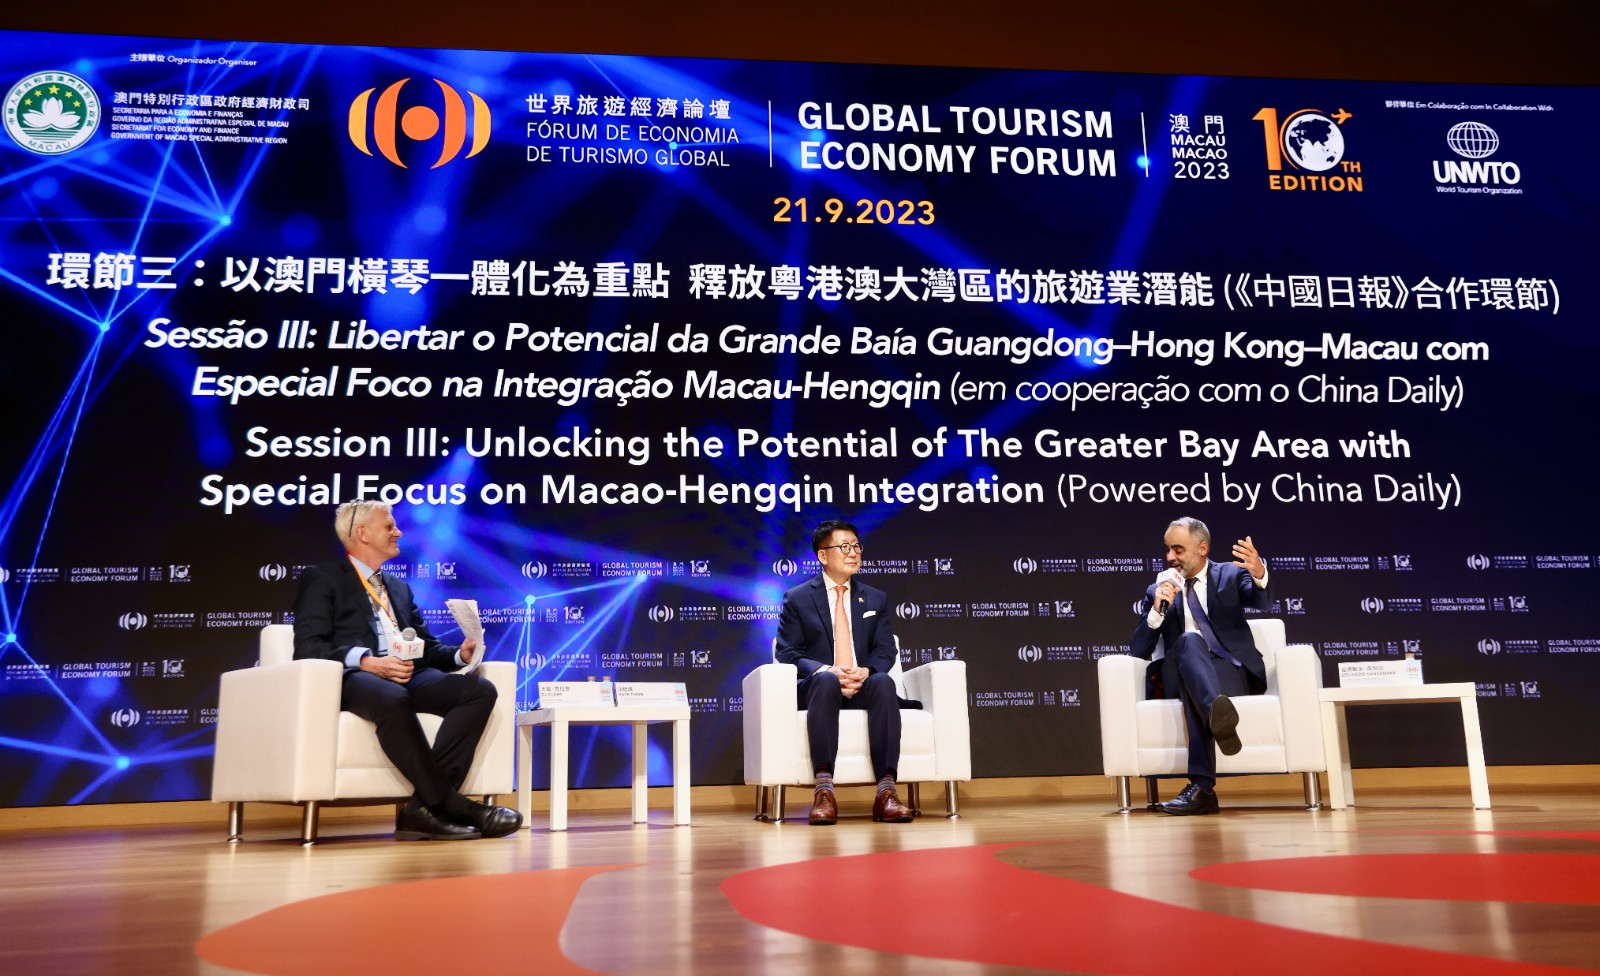 Global Tourism Economy Forum 2023